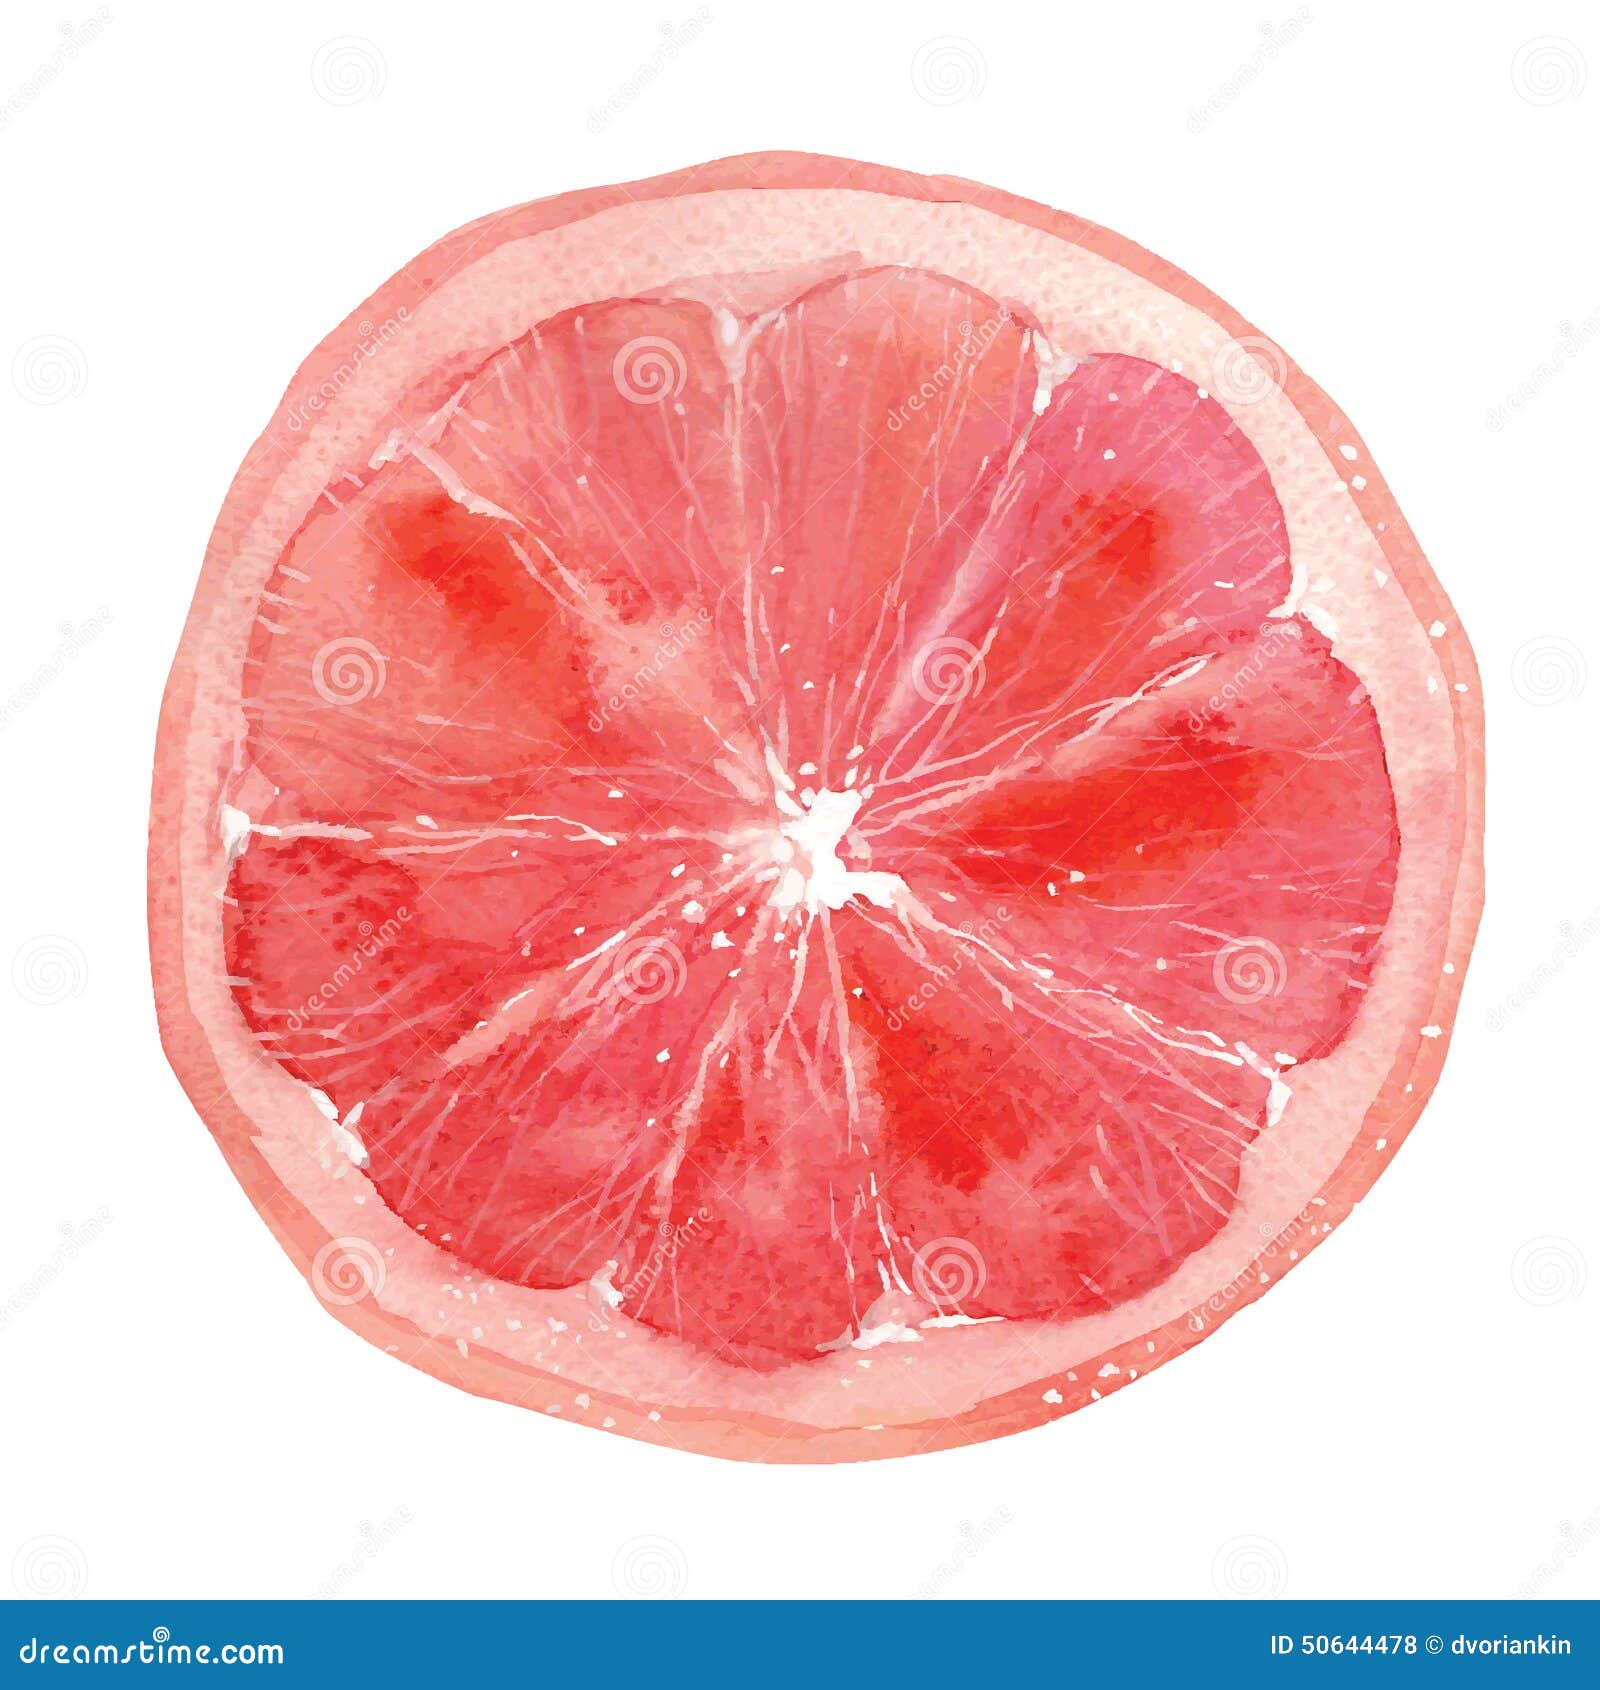 Grapefruit Cartoons, Illustrations & Vector Stock Images - 6002